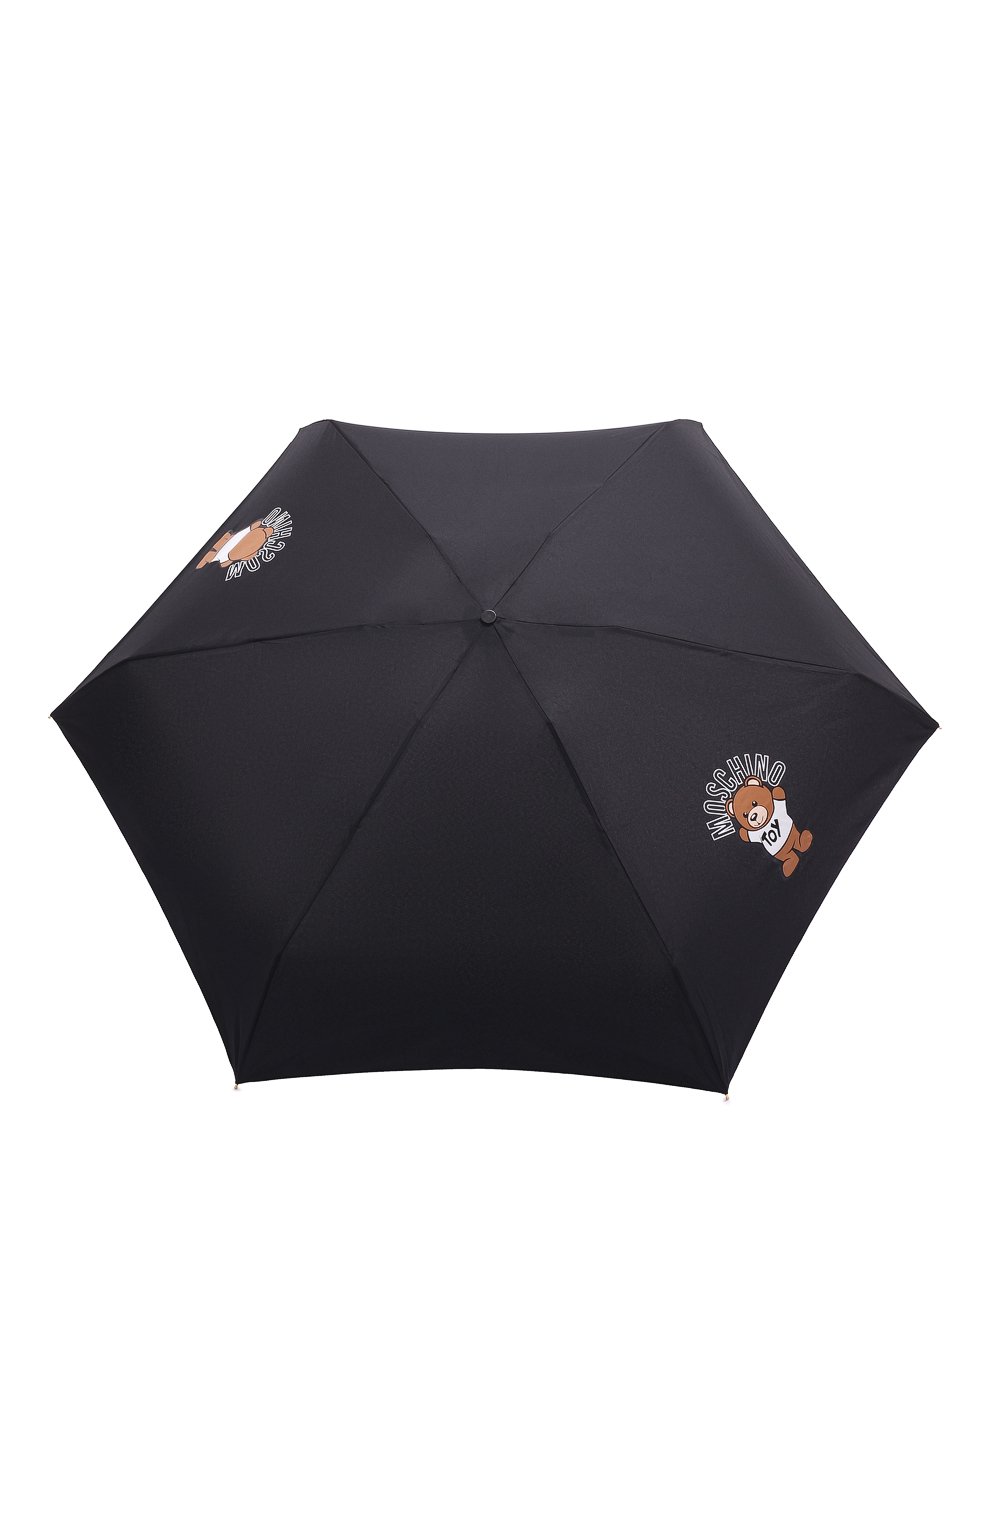 Женский складной зонт MOSCHINO черного цвета, арт. 8351-SUPERMINI | Фото 1 (�Материал: Текстиль, Синтетический материал, Металл)